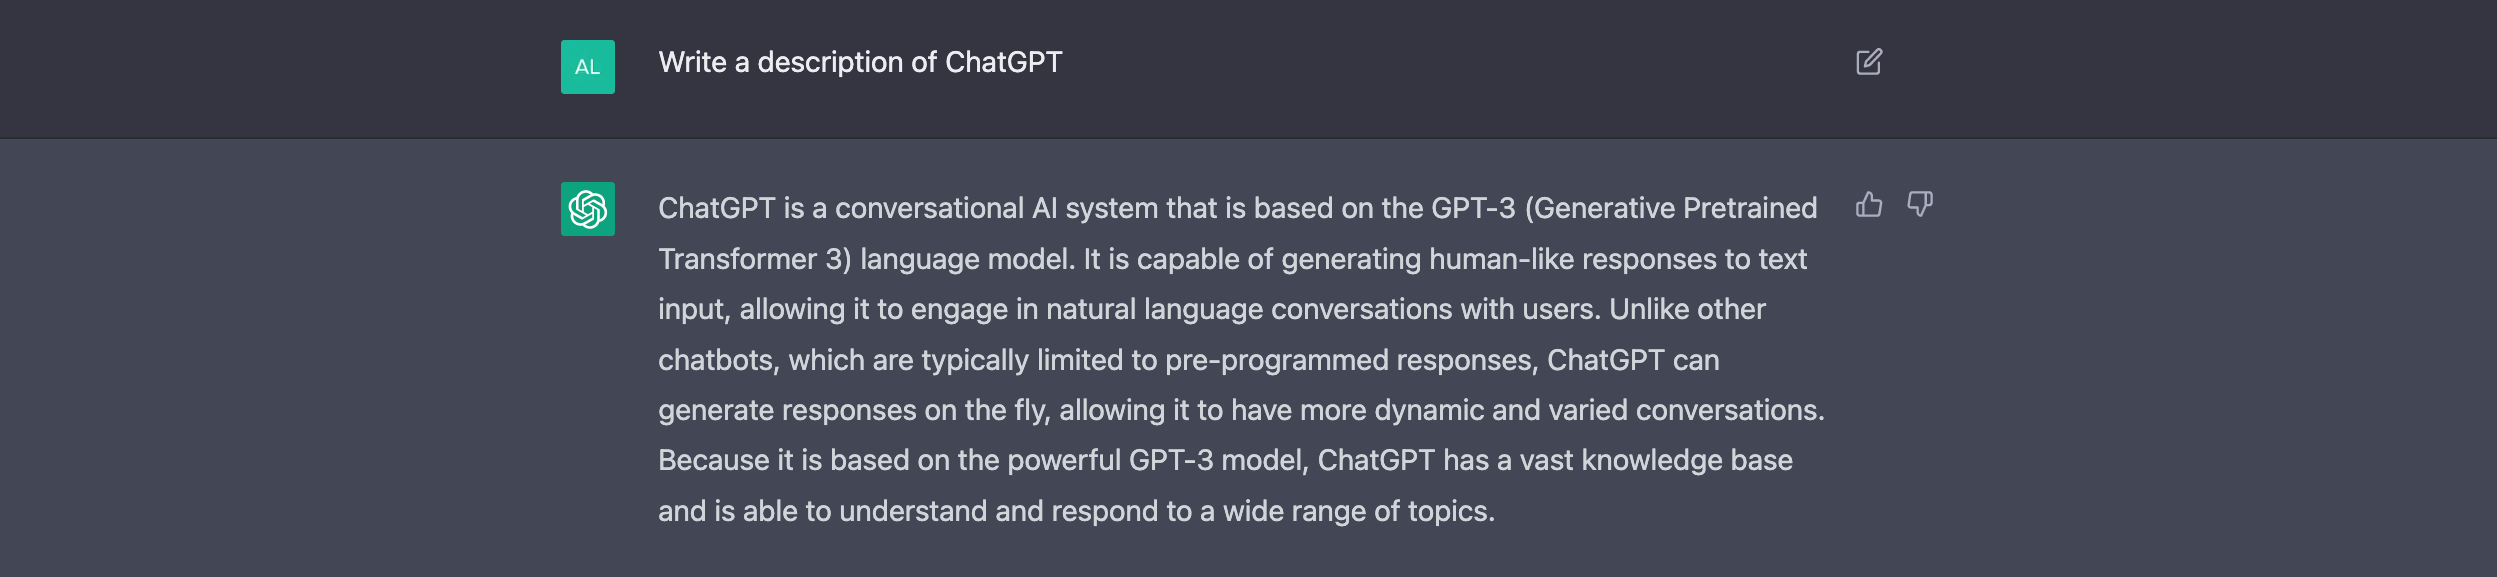 chat-GPT-la-gi